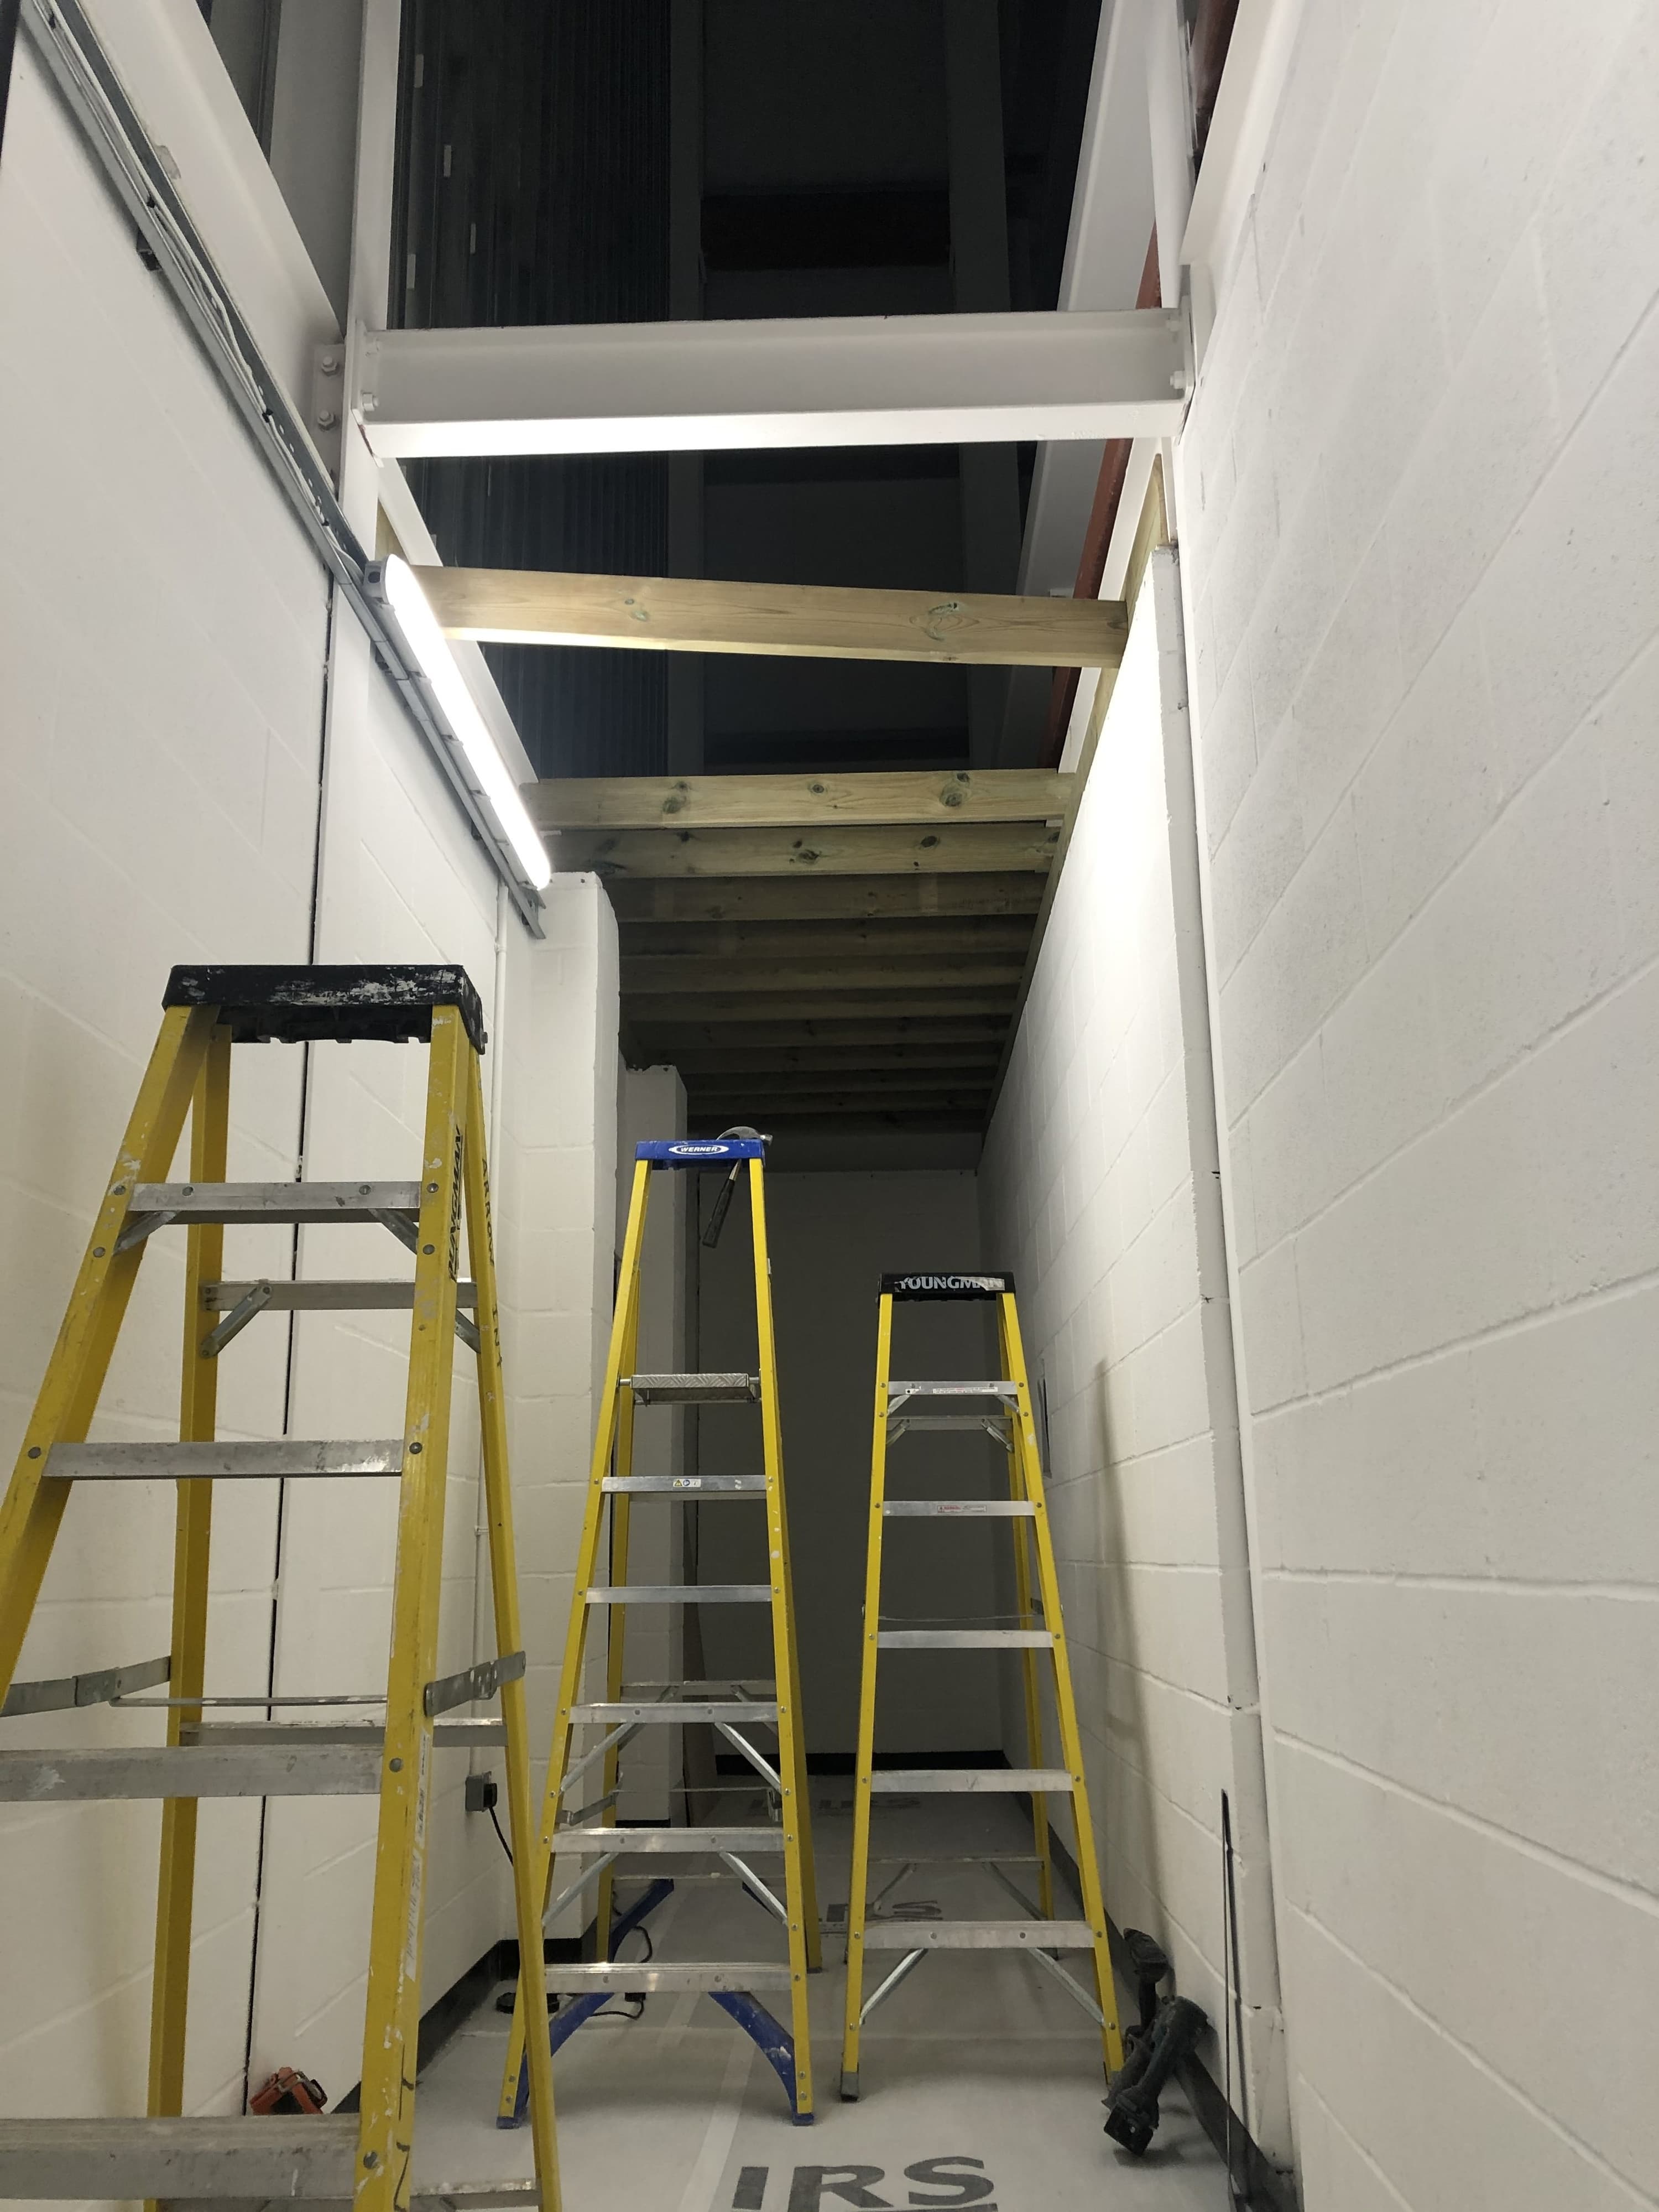 3 ladders is galley storage space